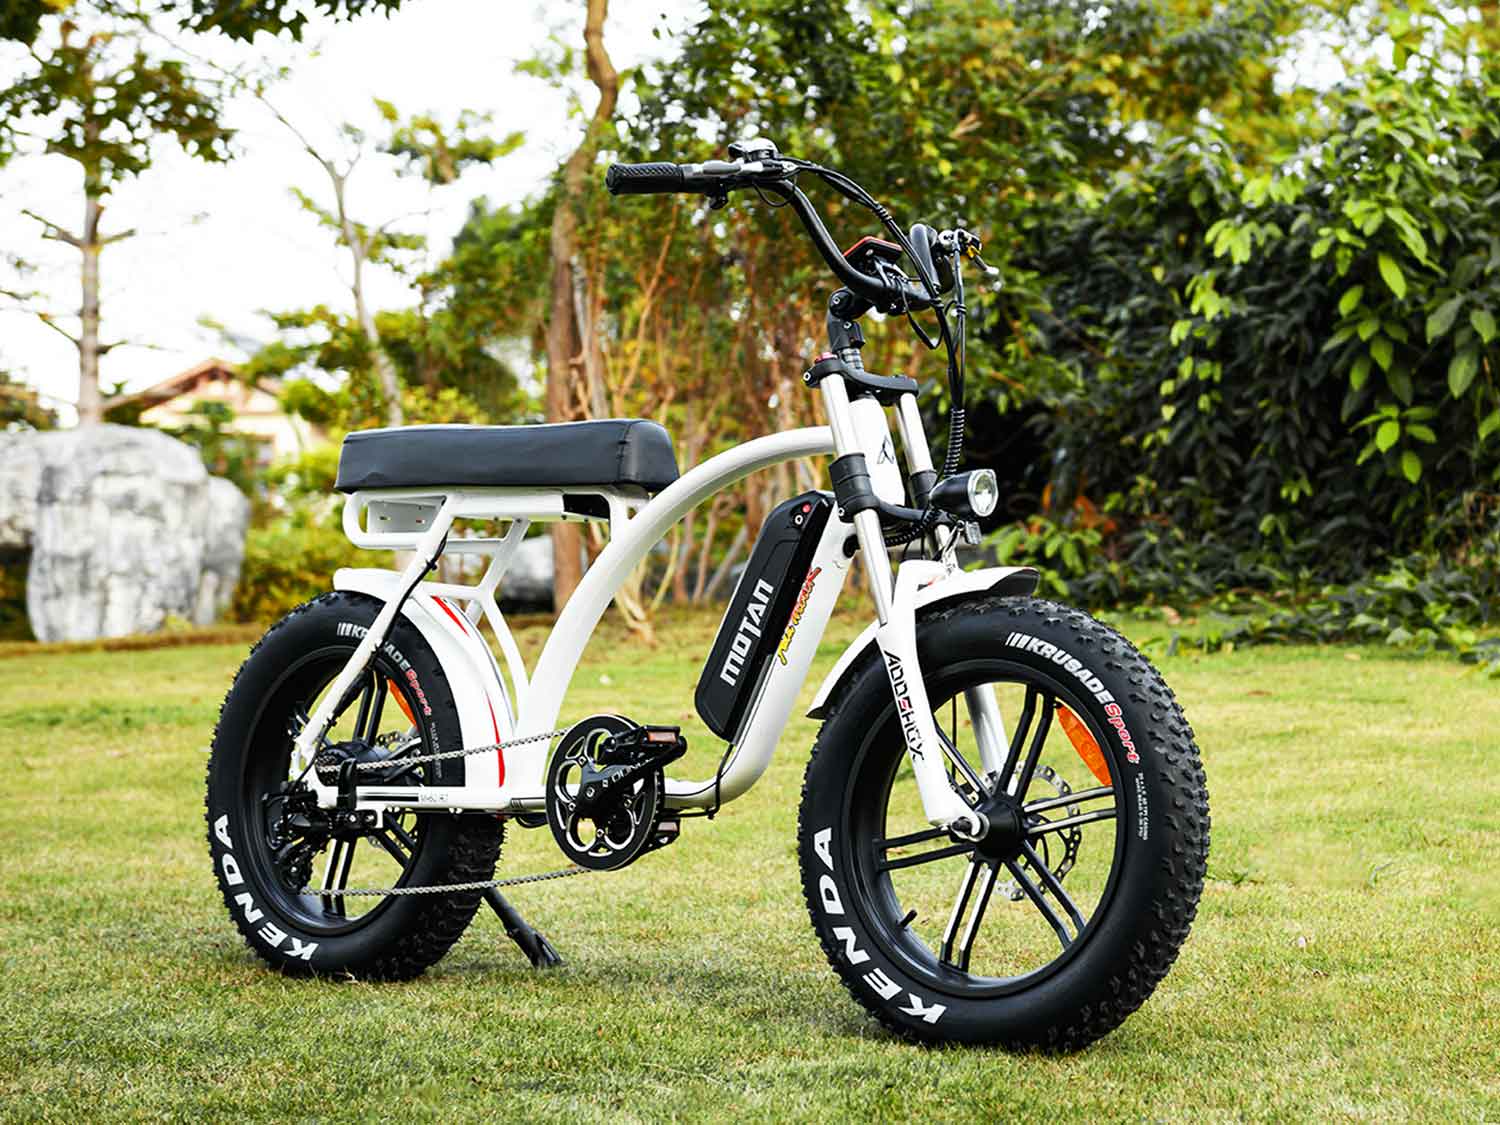 Electric Cruiser Bike丨addmotor E Bike Battery Price丨motan M 60 R7